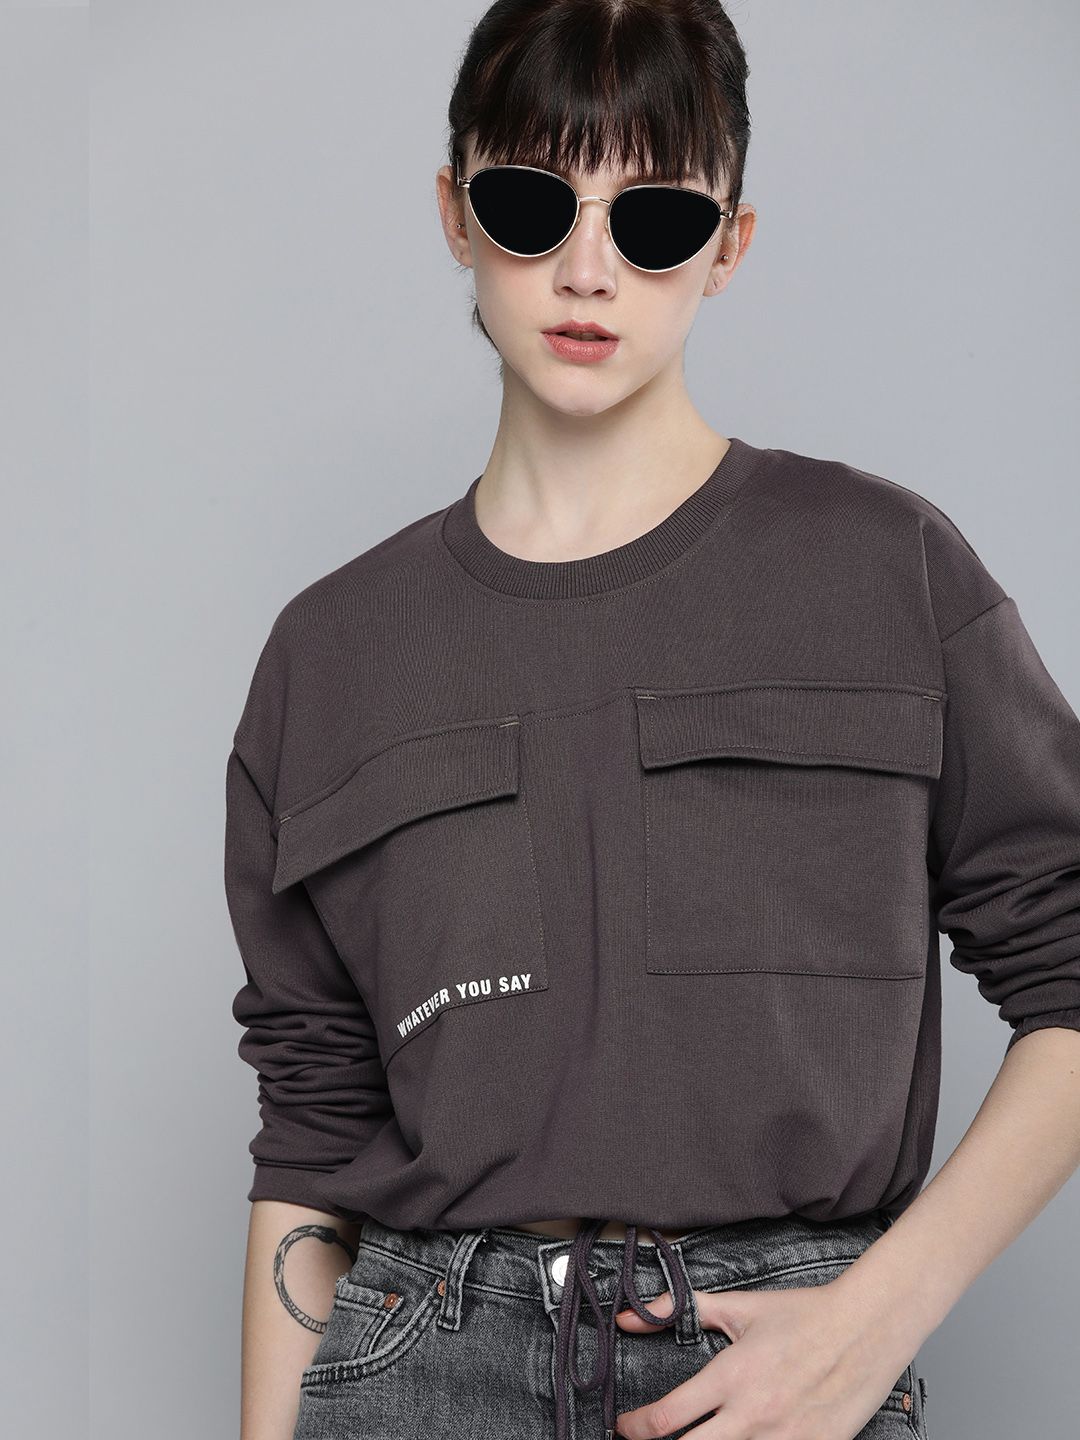 Kook N Keech Women Charcoal Solid Pullover Crop Sweatshirt With Tie-Up Detail Price in India